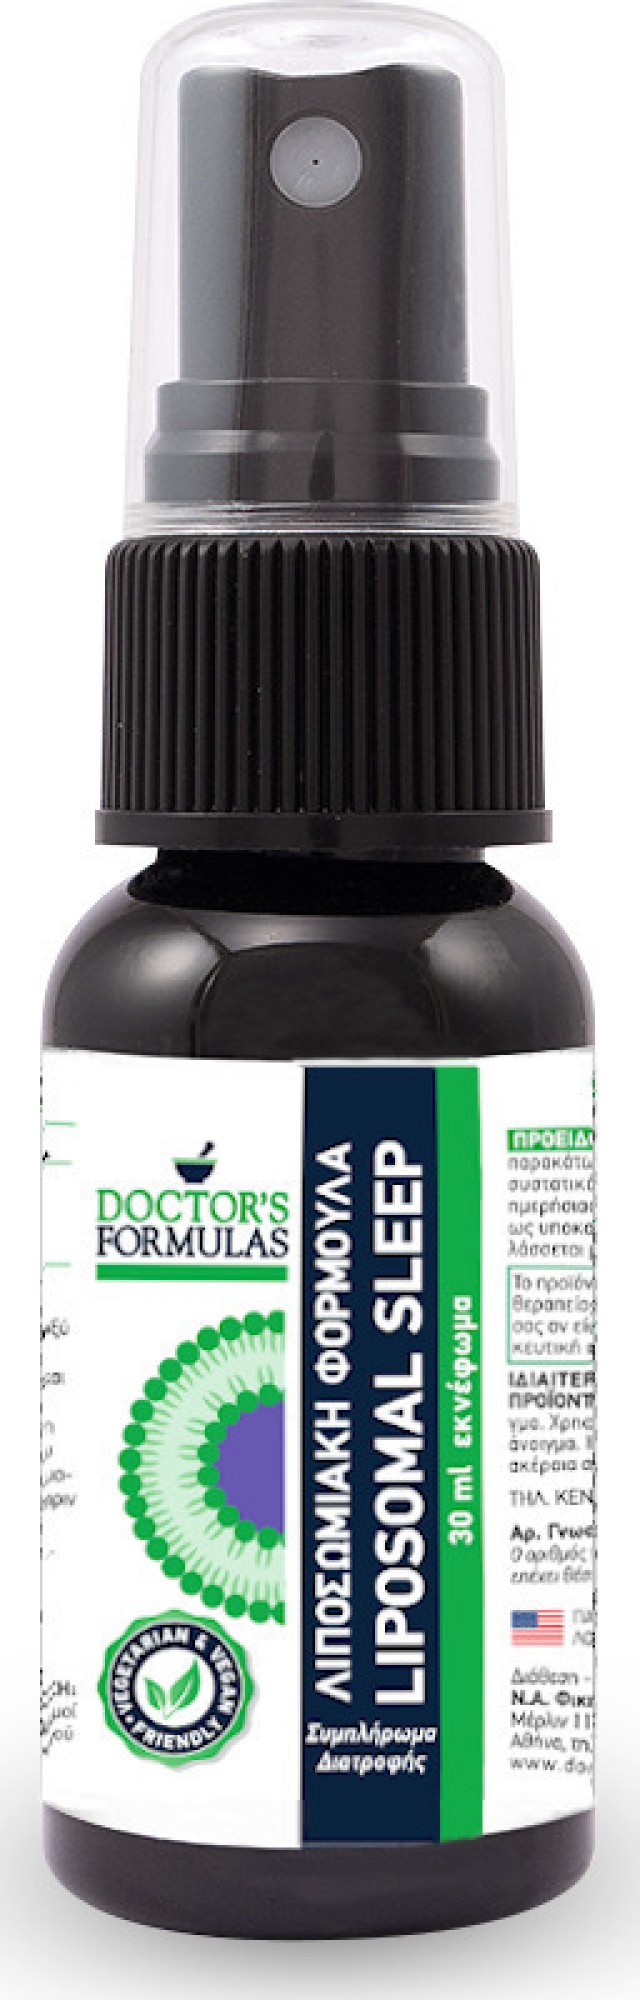 Doctors Formulas Liposomal Sleep Spray 30ml